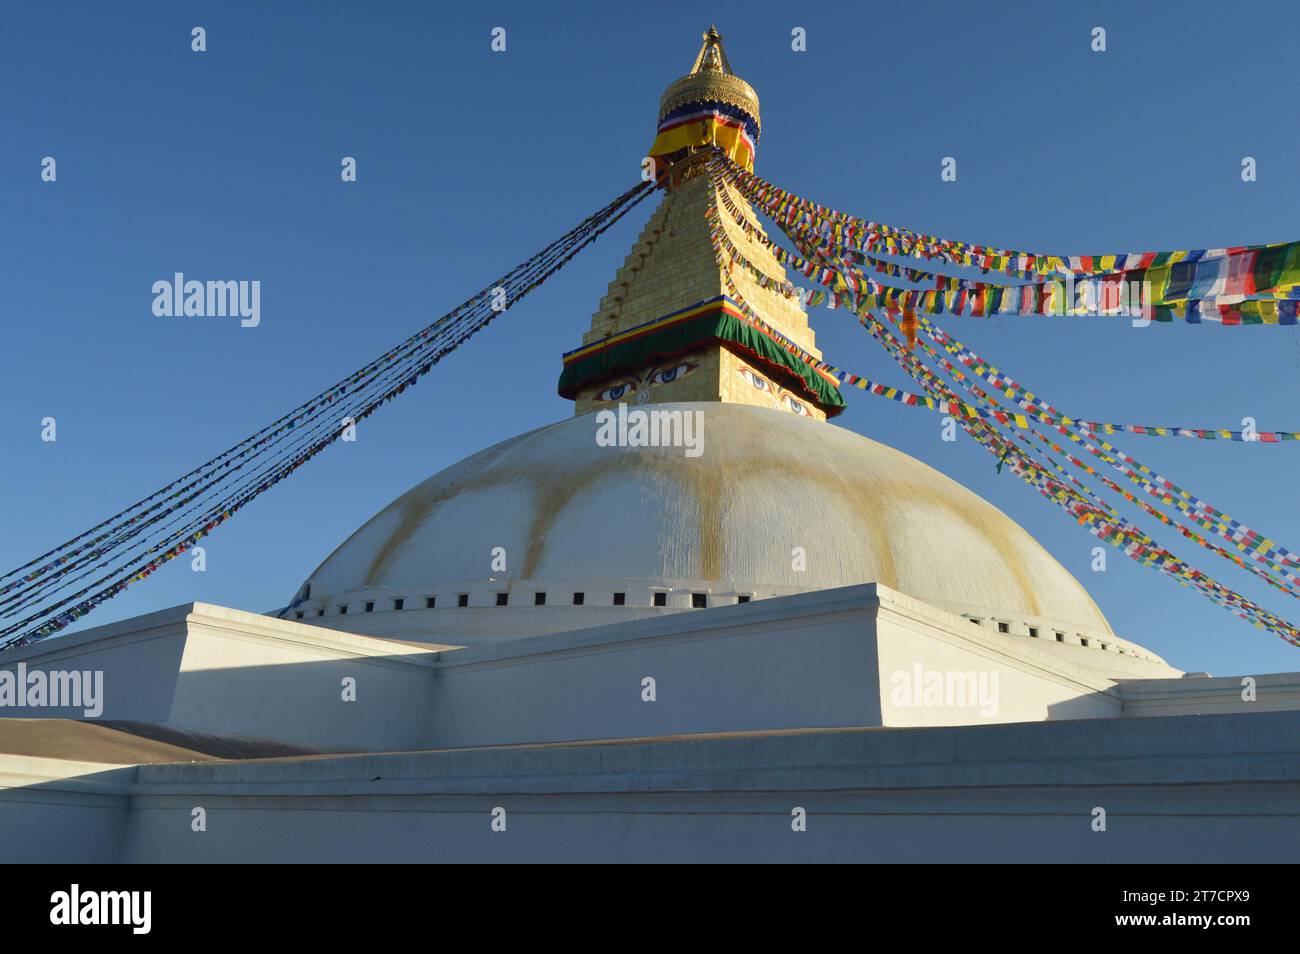 Bauddha Radiance : Symphonie culturelle de Stupa' 'Bauddha Tapisserie : fils de stupa de spiritualité' 'Bauddha Elysium : merveilles de stupa embrassées' 'Bauddha Banque D'Images